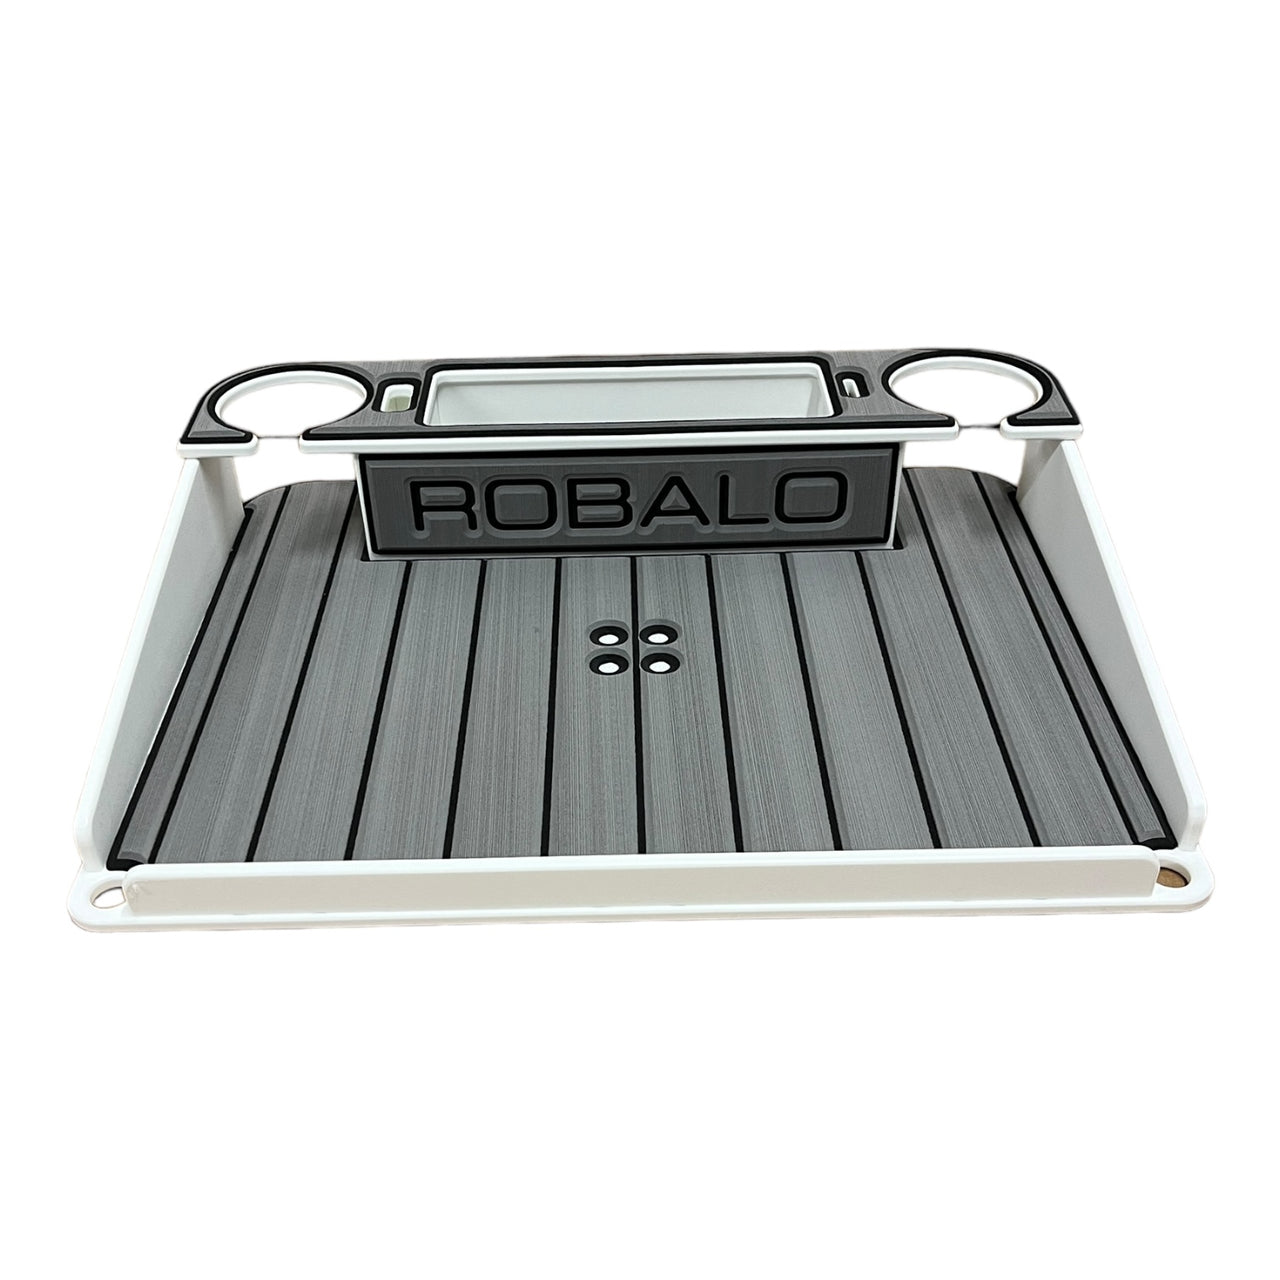 Robalo Logo - Docktail Boat Tables with Adjustable Rod Holder Mount - Choose Your Table Model - Then Color